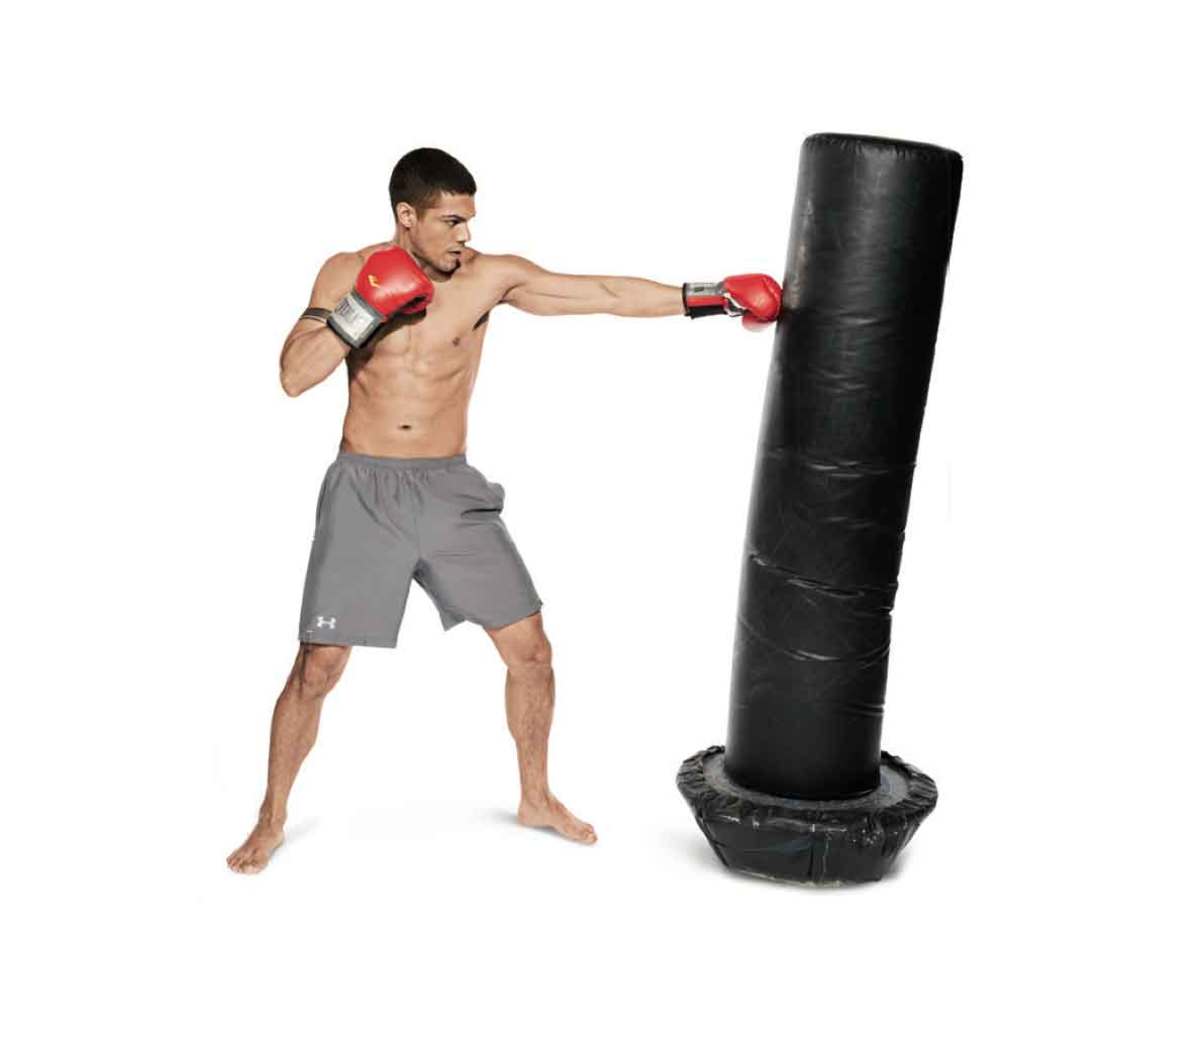 kickboxing workout with punching bag